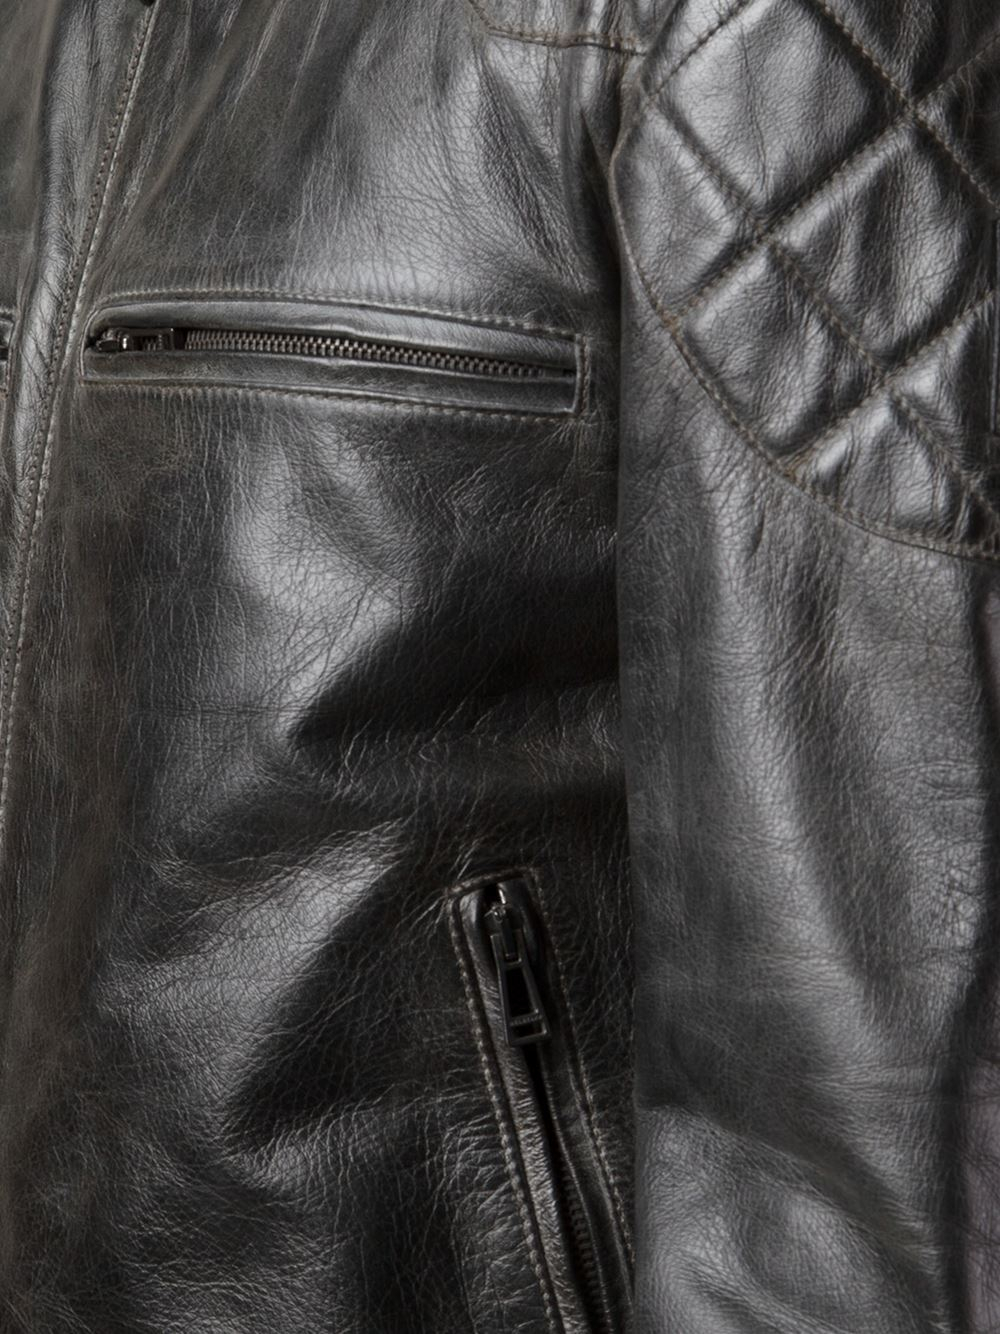 Lyst - Belstaff 'Stannard' Jacket in Black for Men